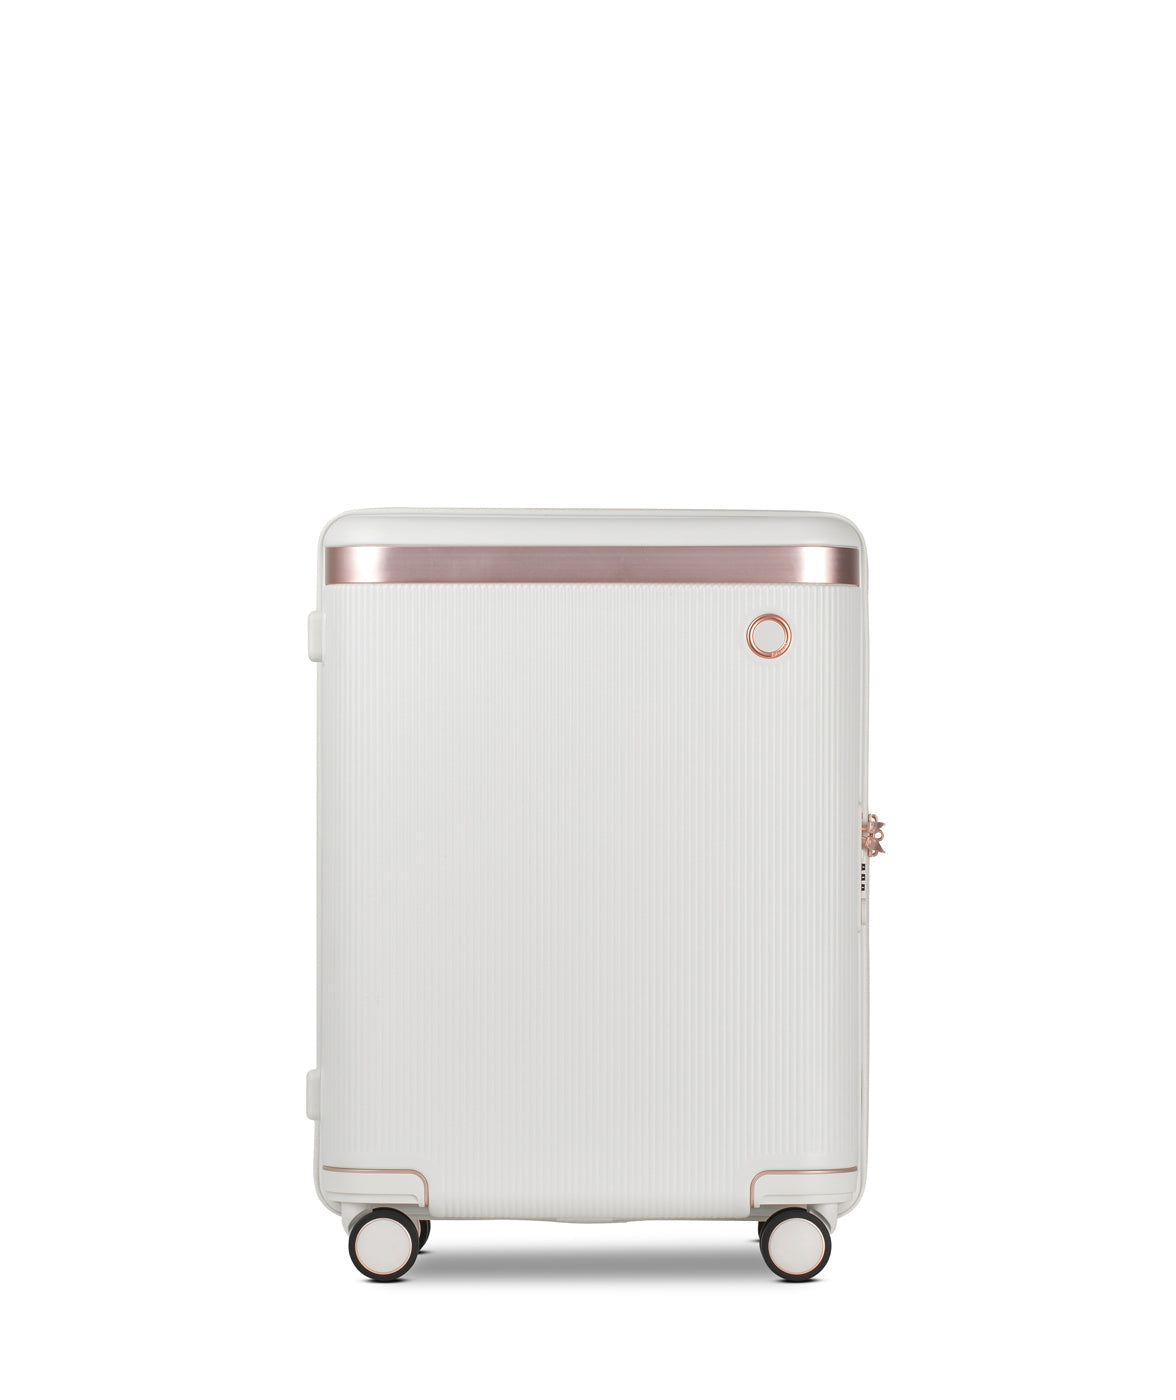 Echolac Dynasty Suitcase, Small 55 cm, Ivory White